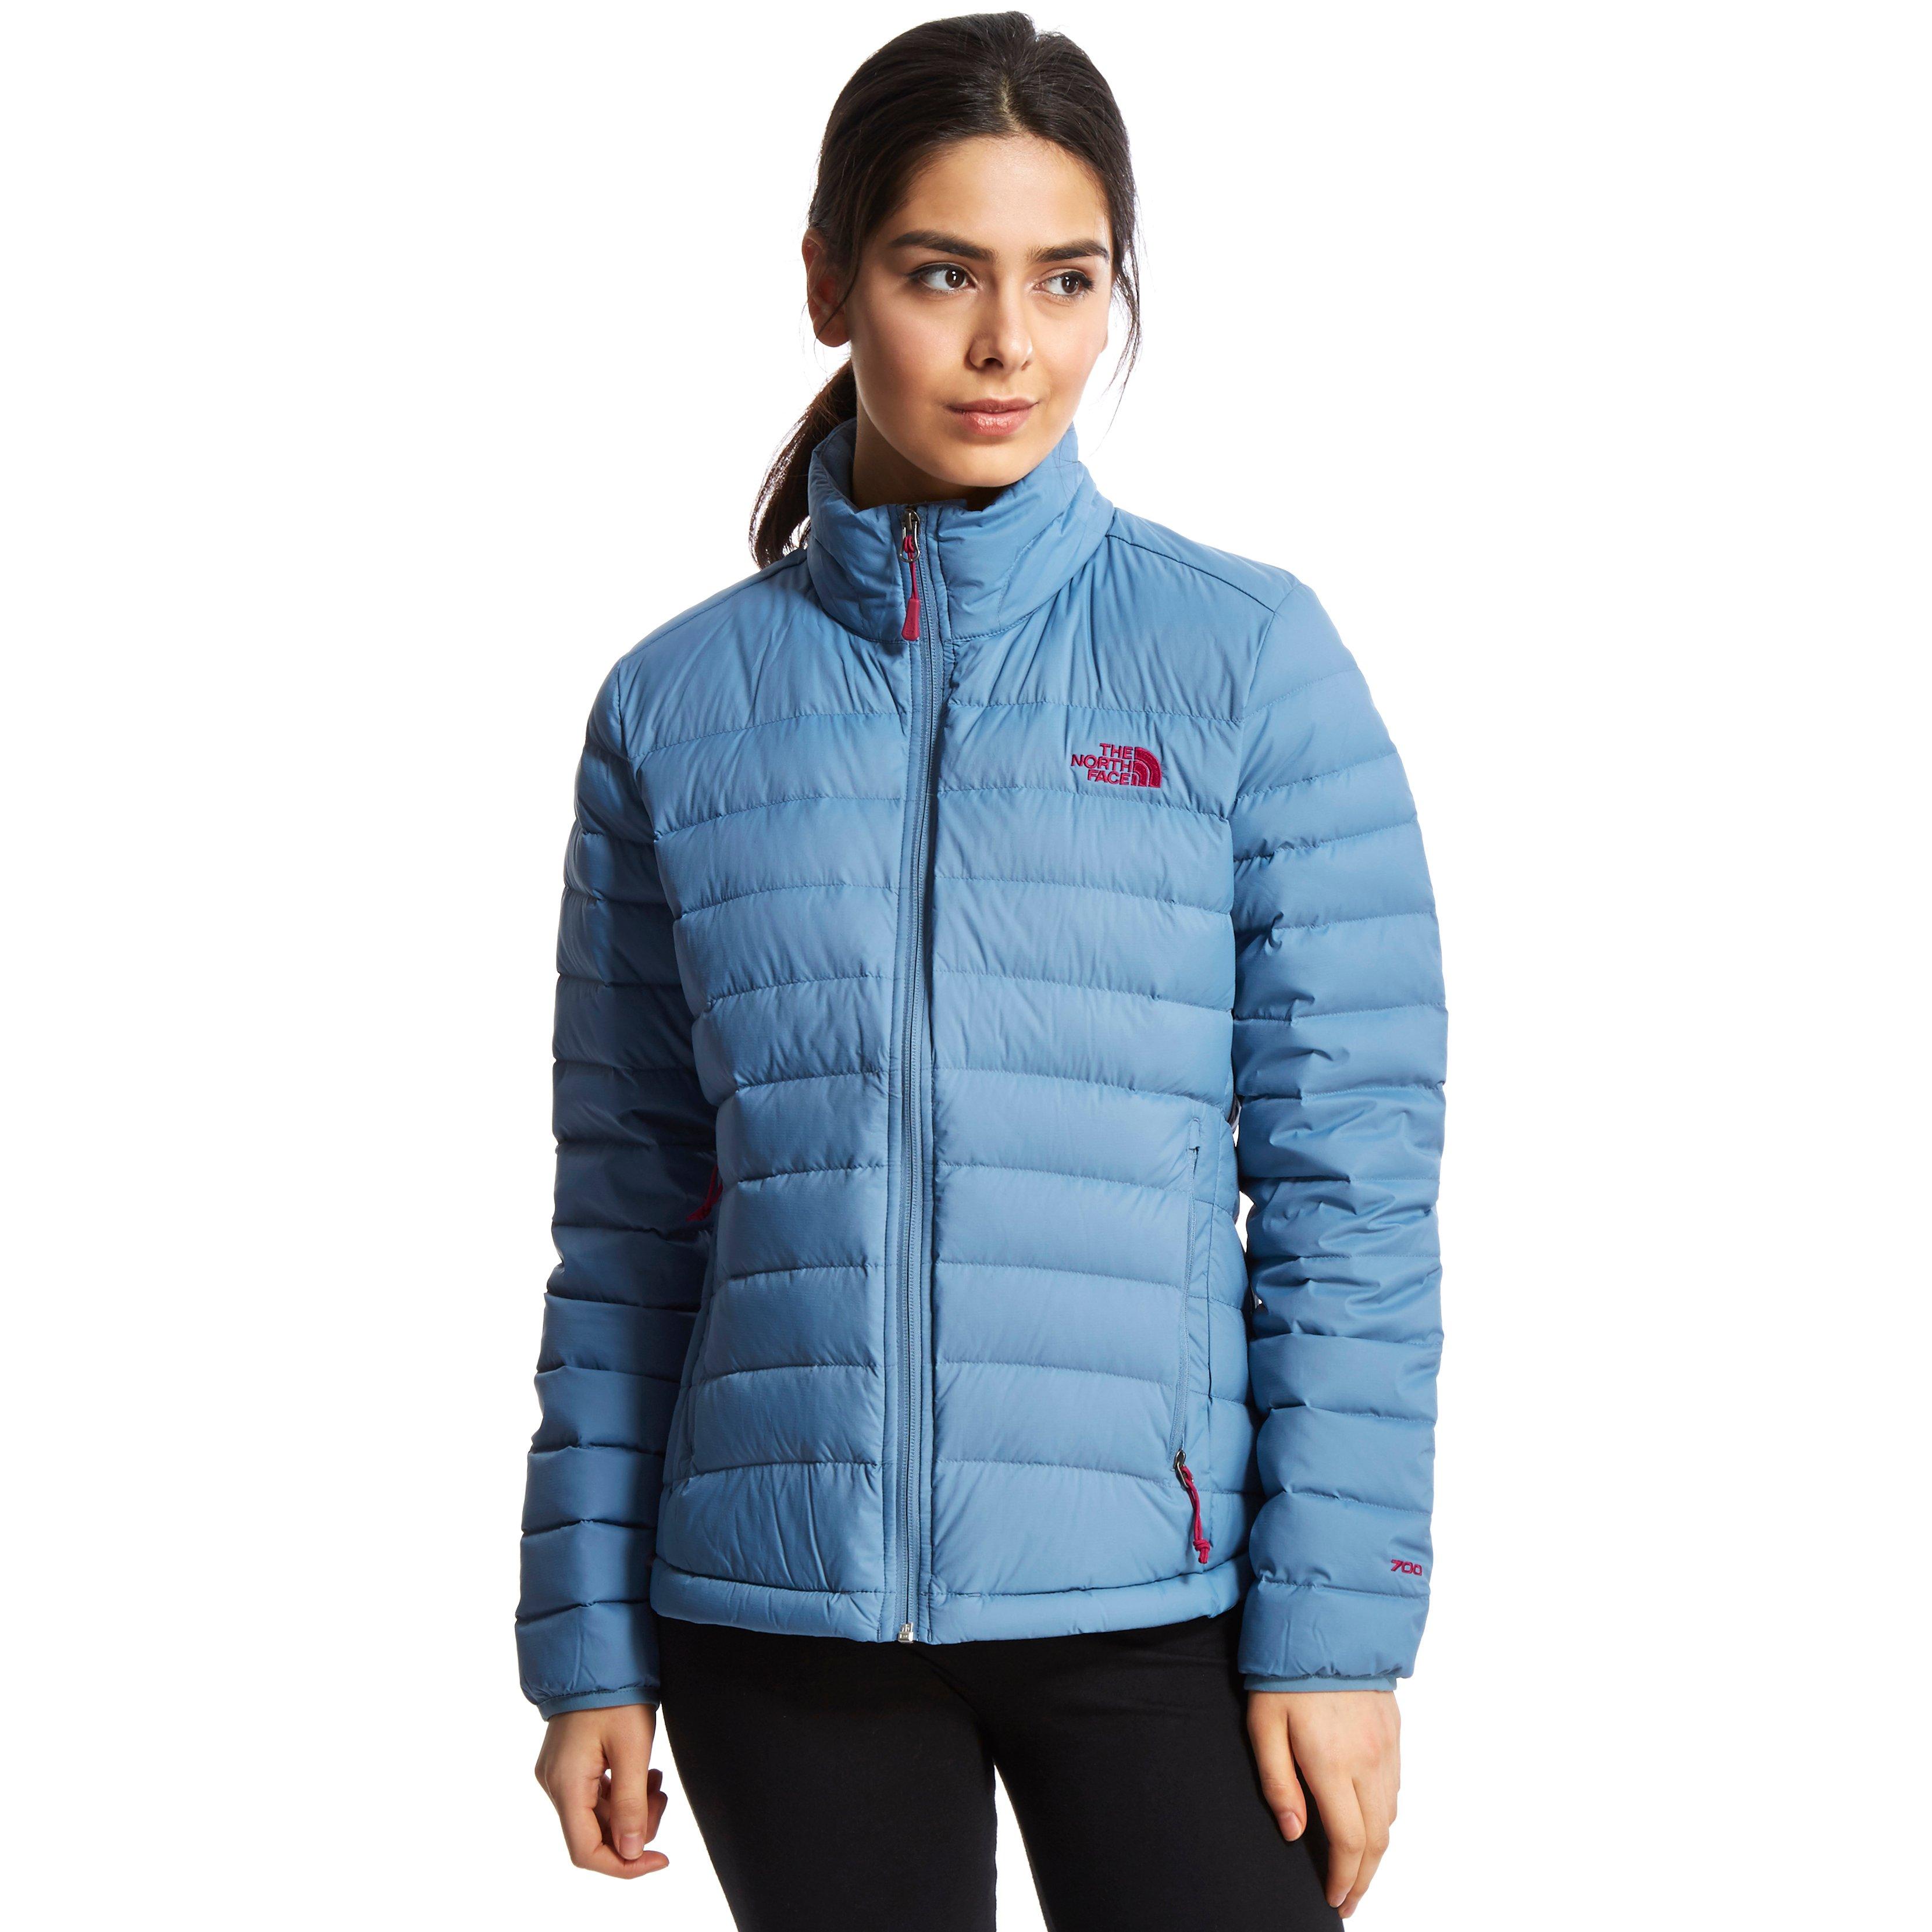 north face jacket women's sale - Marwood VeneerMarwood Veneer